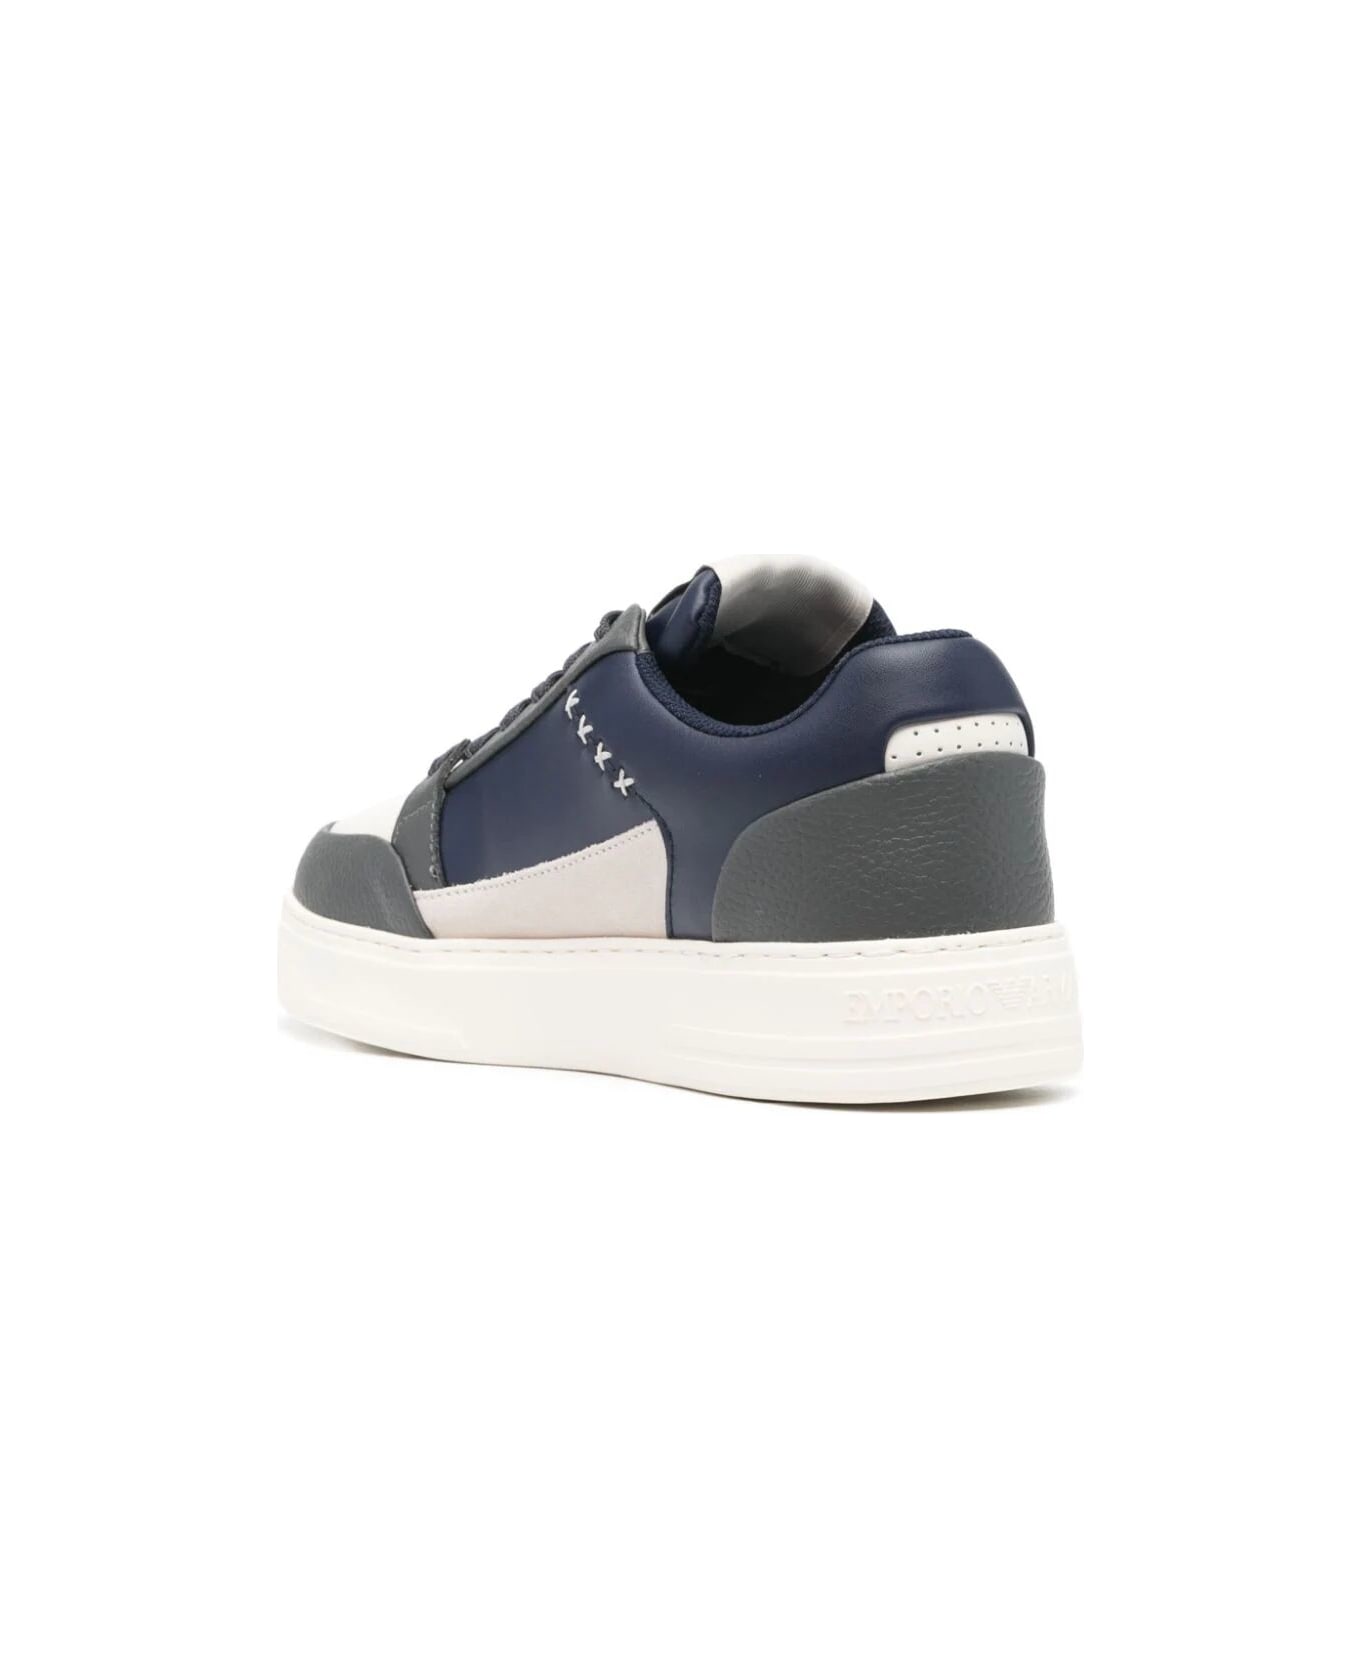 Emporio Armani Suede Sneaker - Grey Off White スニーカー